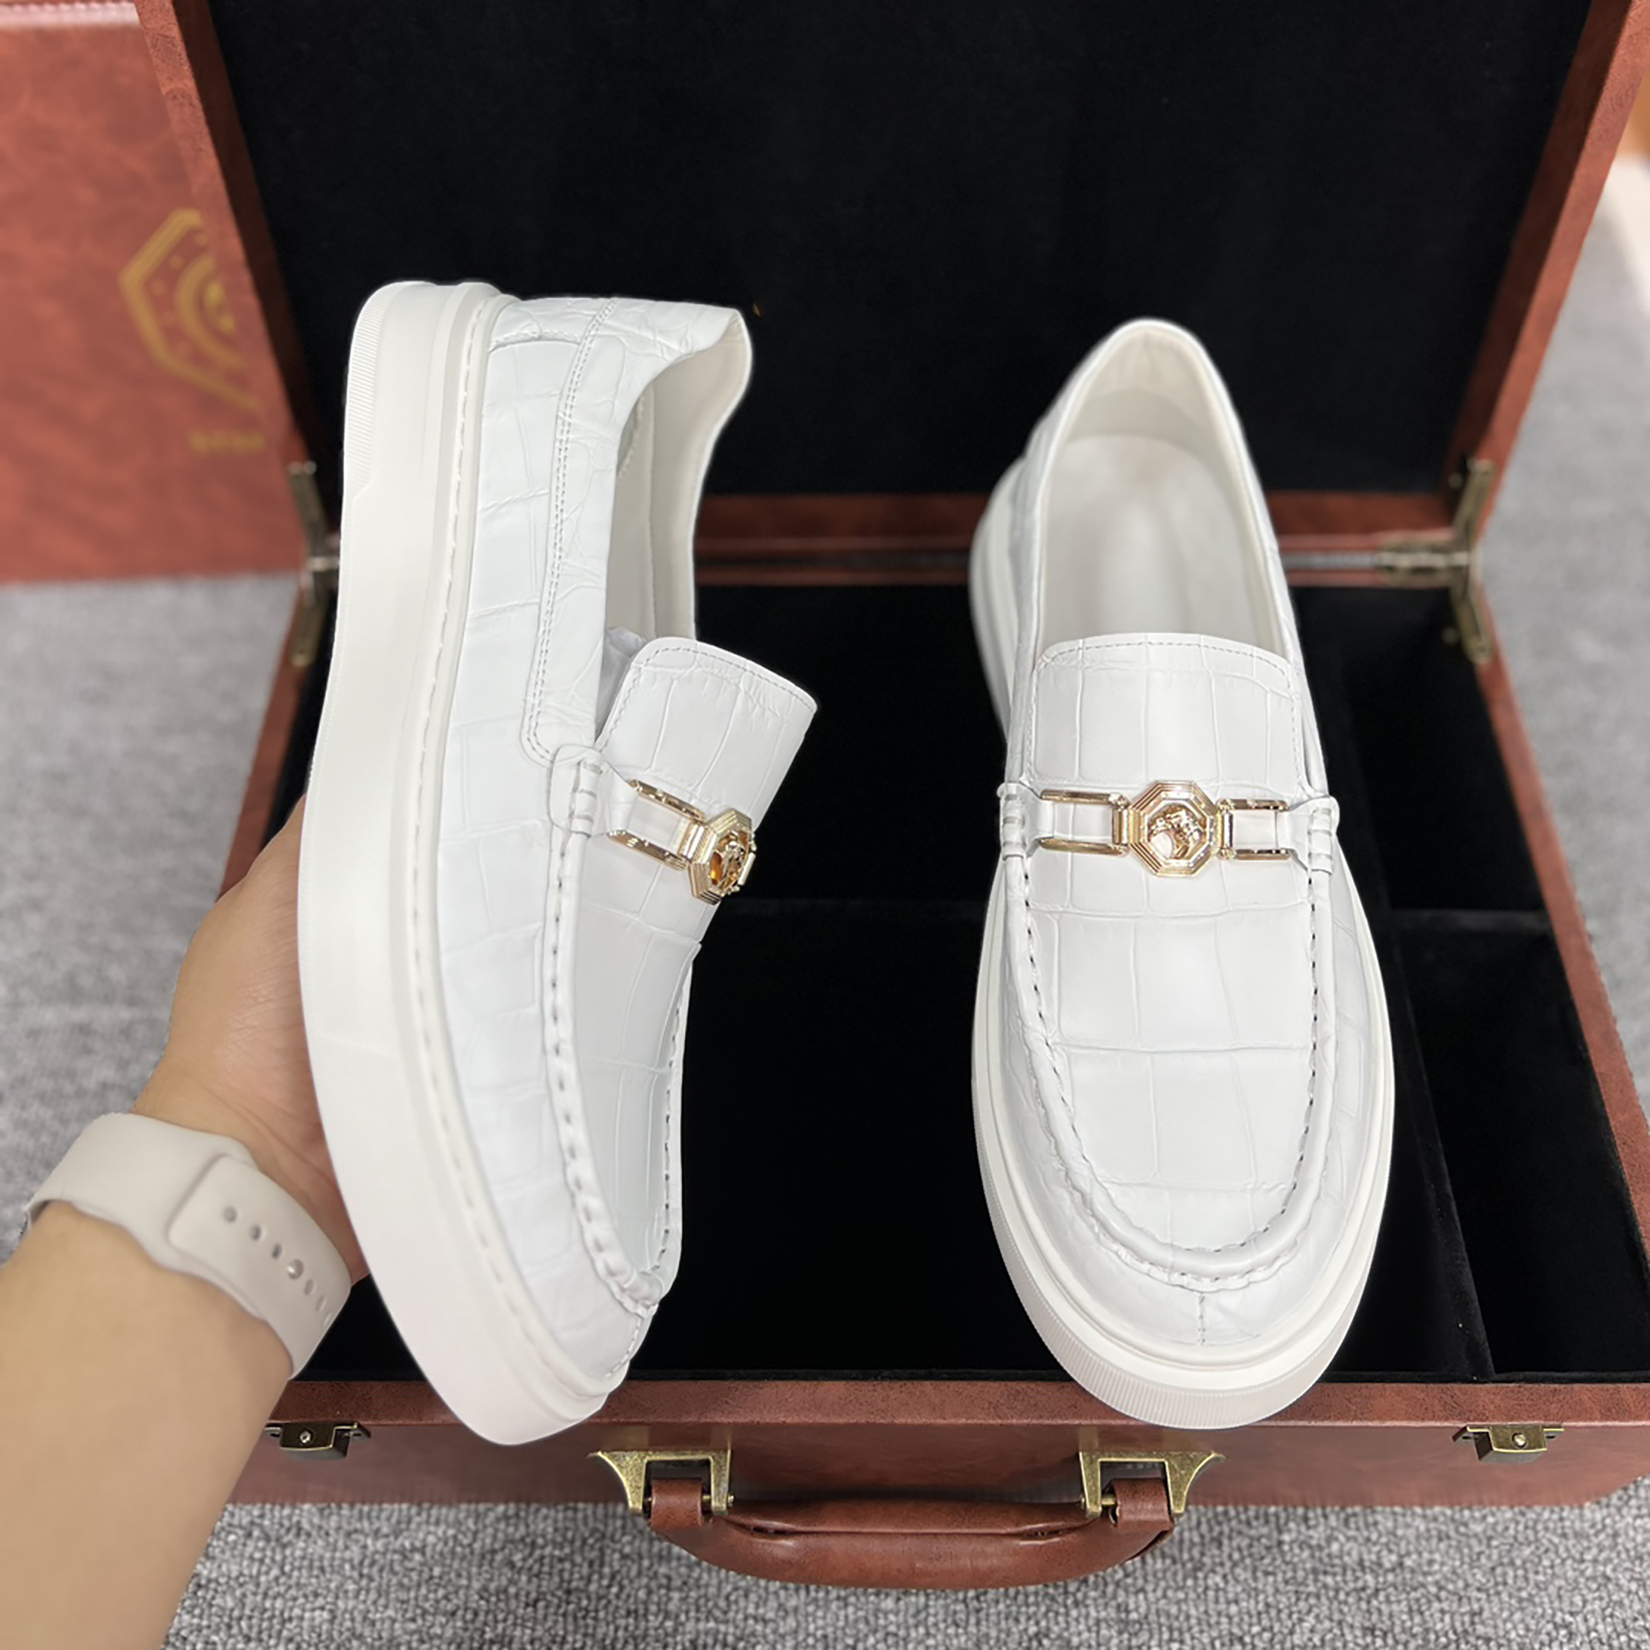 Men's Genuine Crocodile Leather Slip On Loafer Bit Shoes White